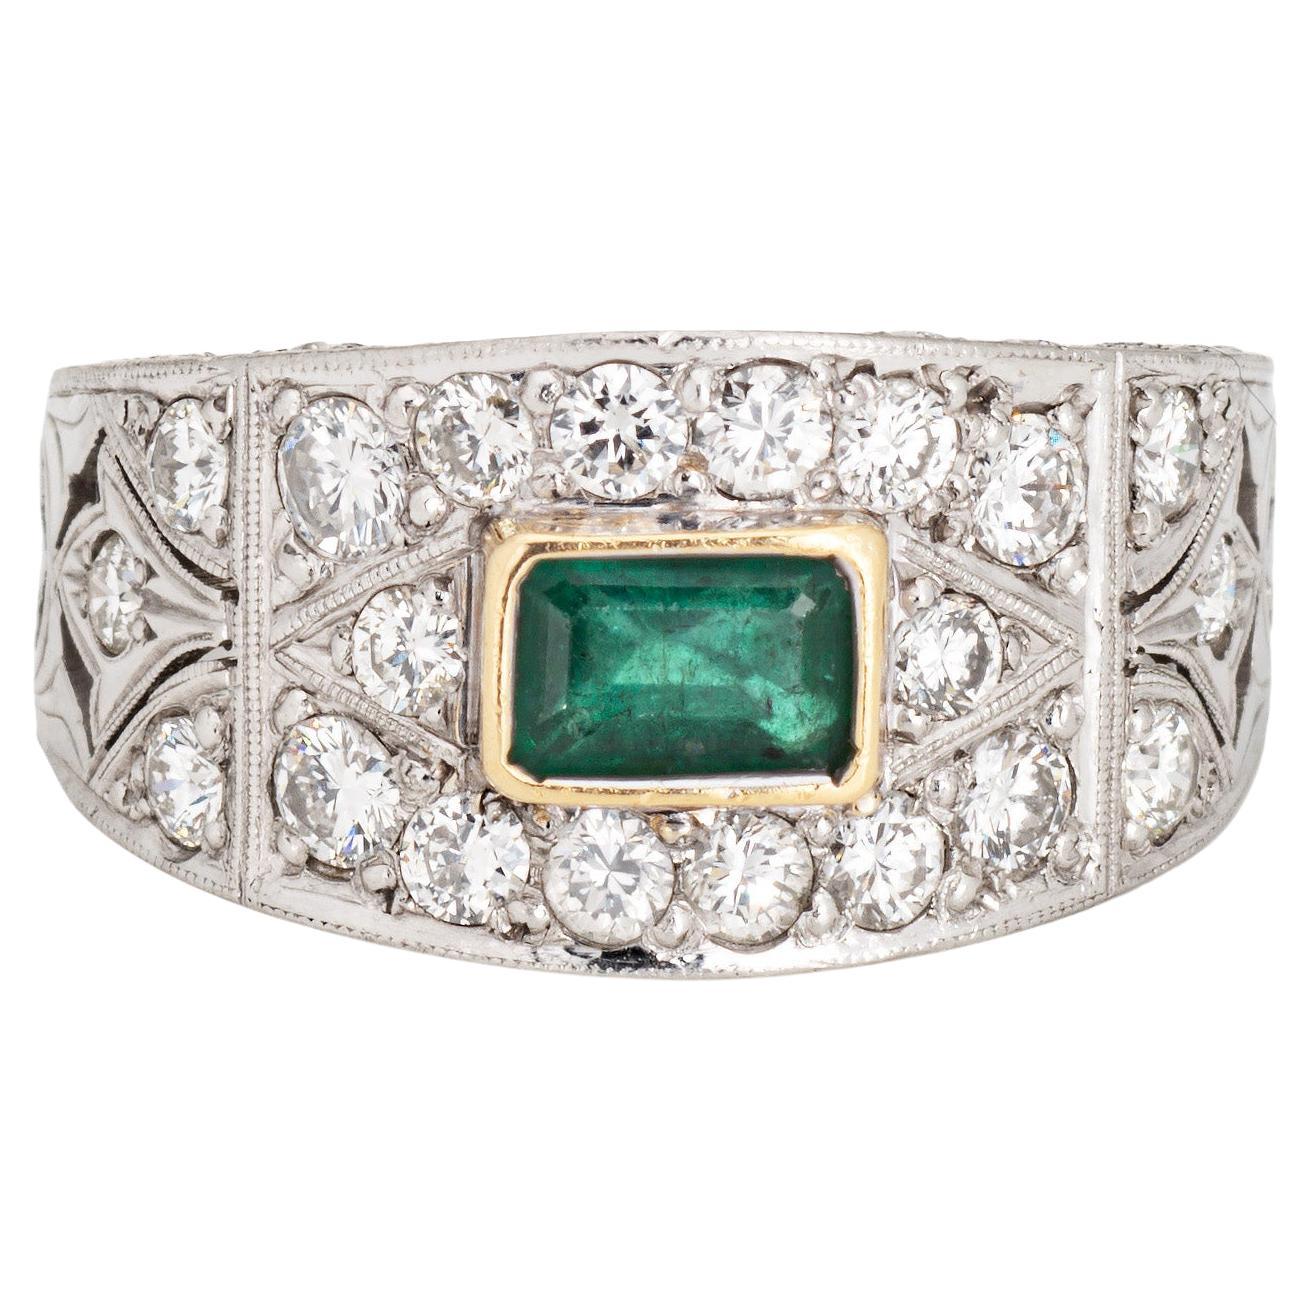 Emerald Diamond Ring Estate Etched Platinum Wide Band Sz 7.5 Estate Jewelry